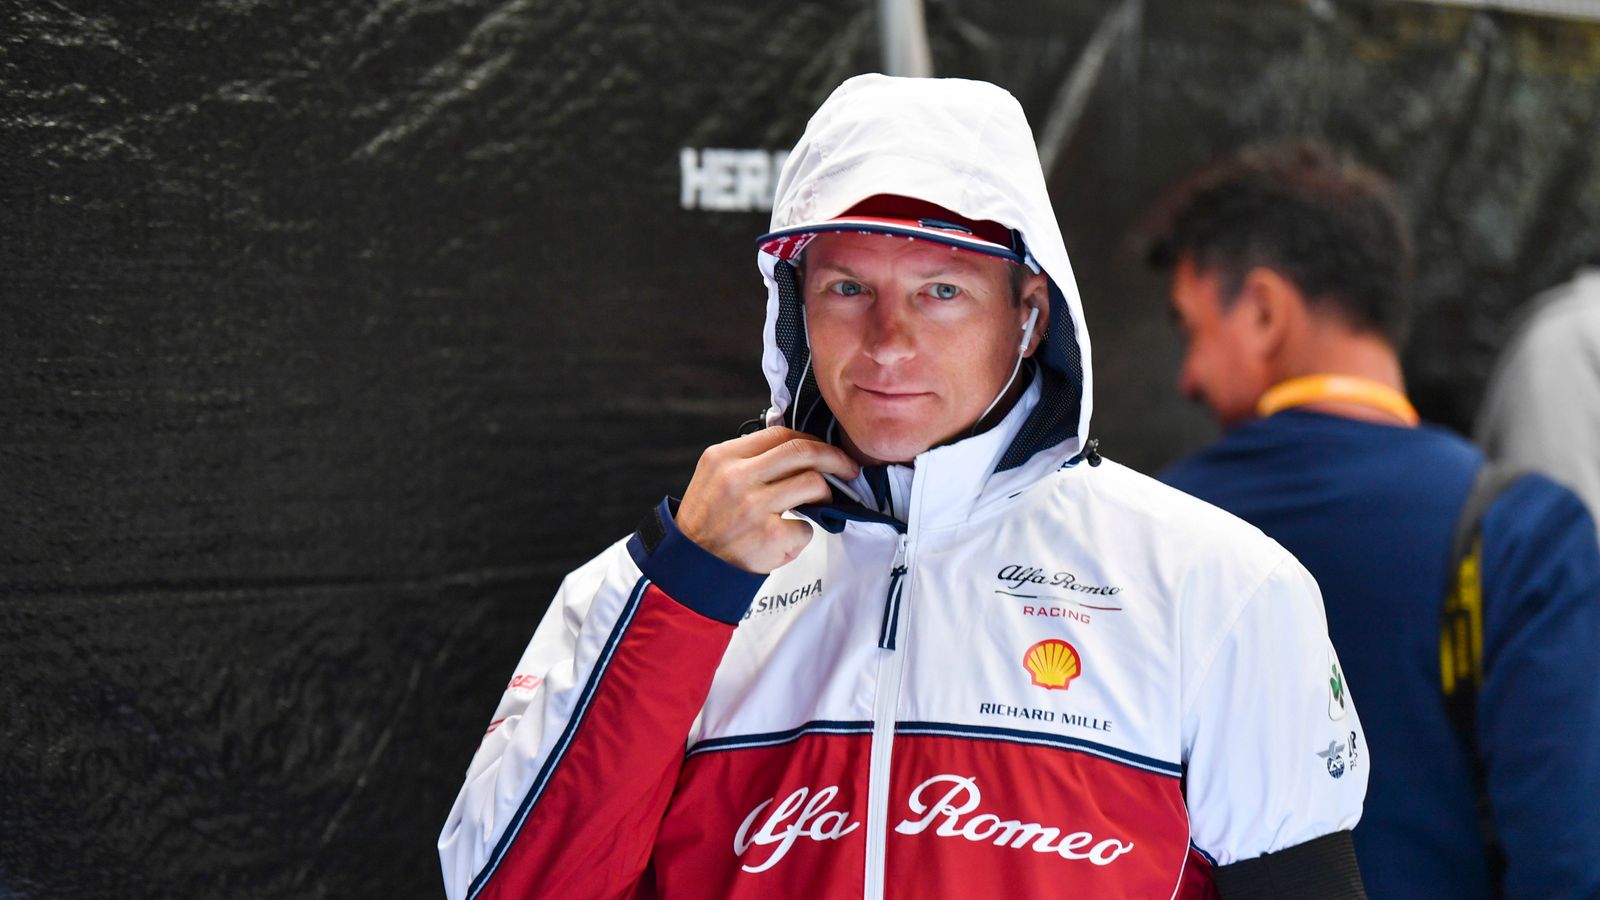 Kimi Raikkonen at 40: Celebrating an F1 icon who has 'no regrets'